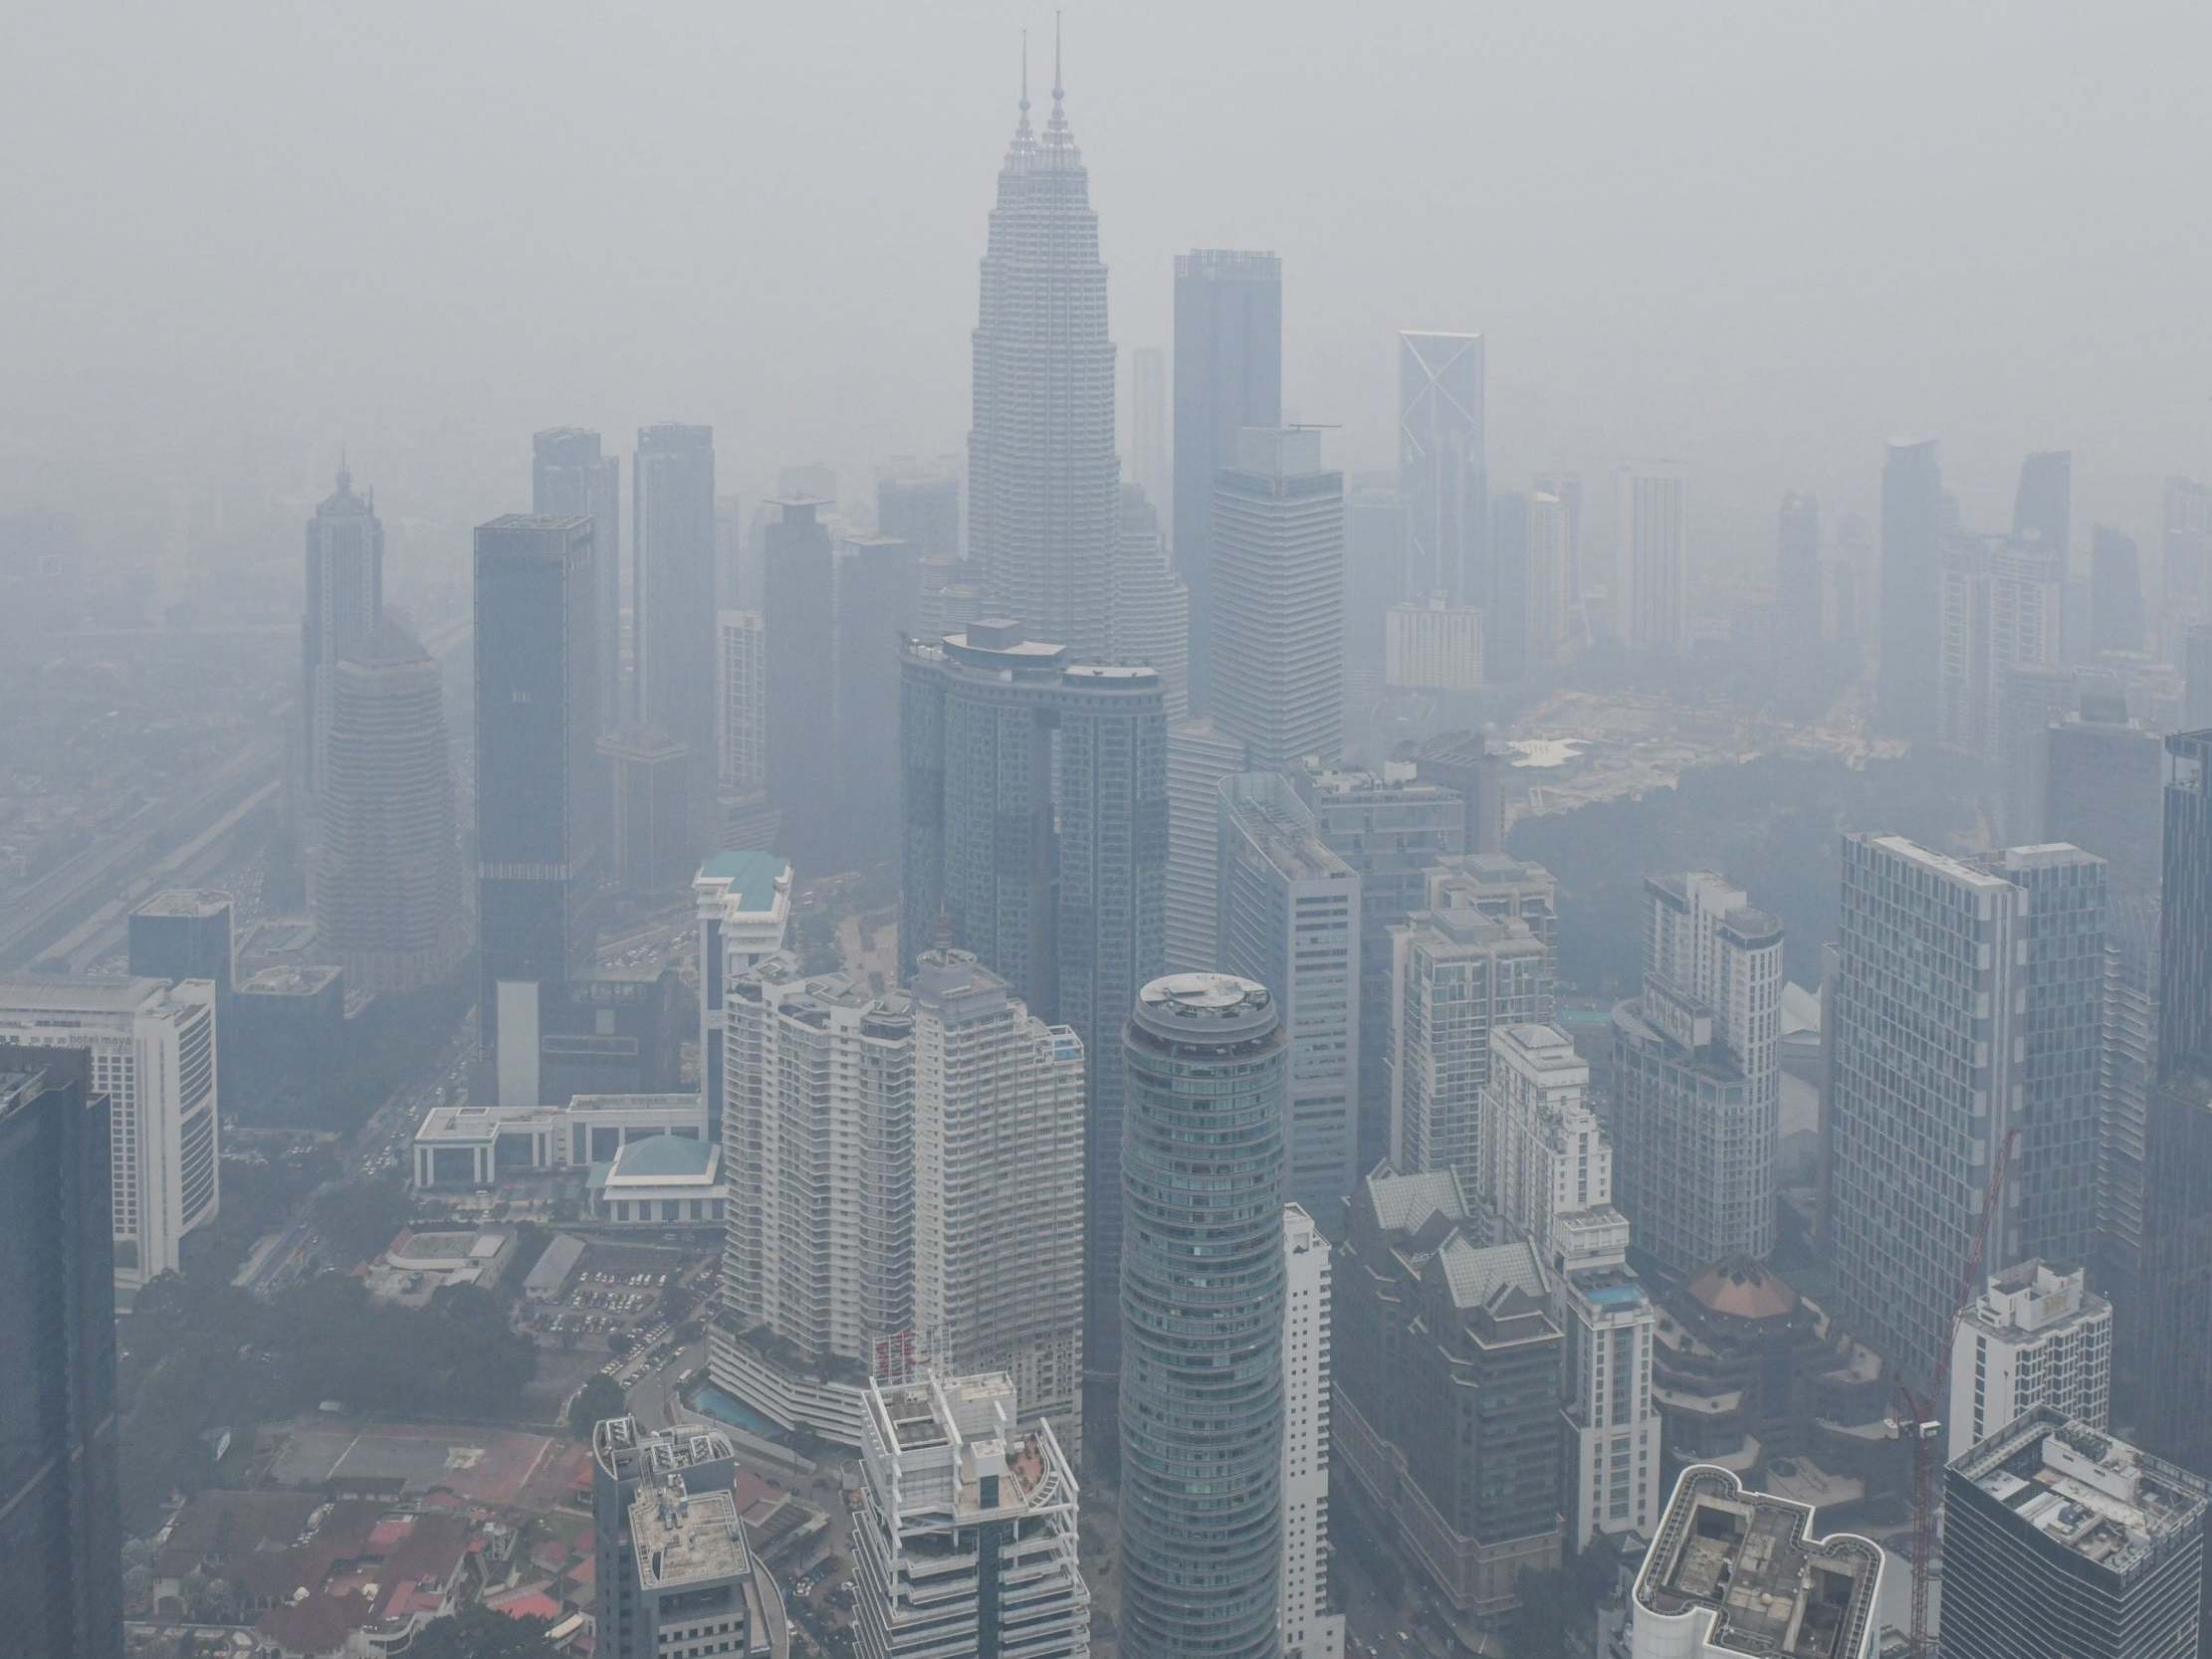 Kuala Lumpur is shrouded in haze